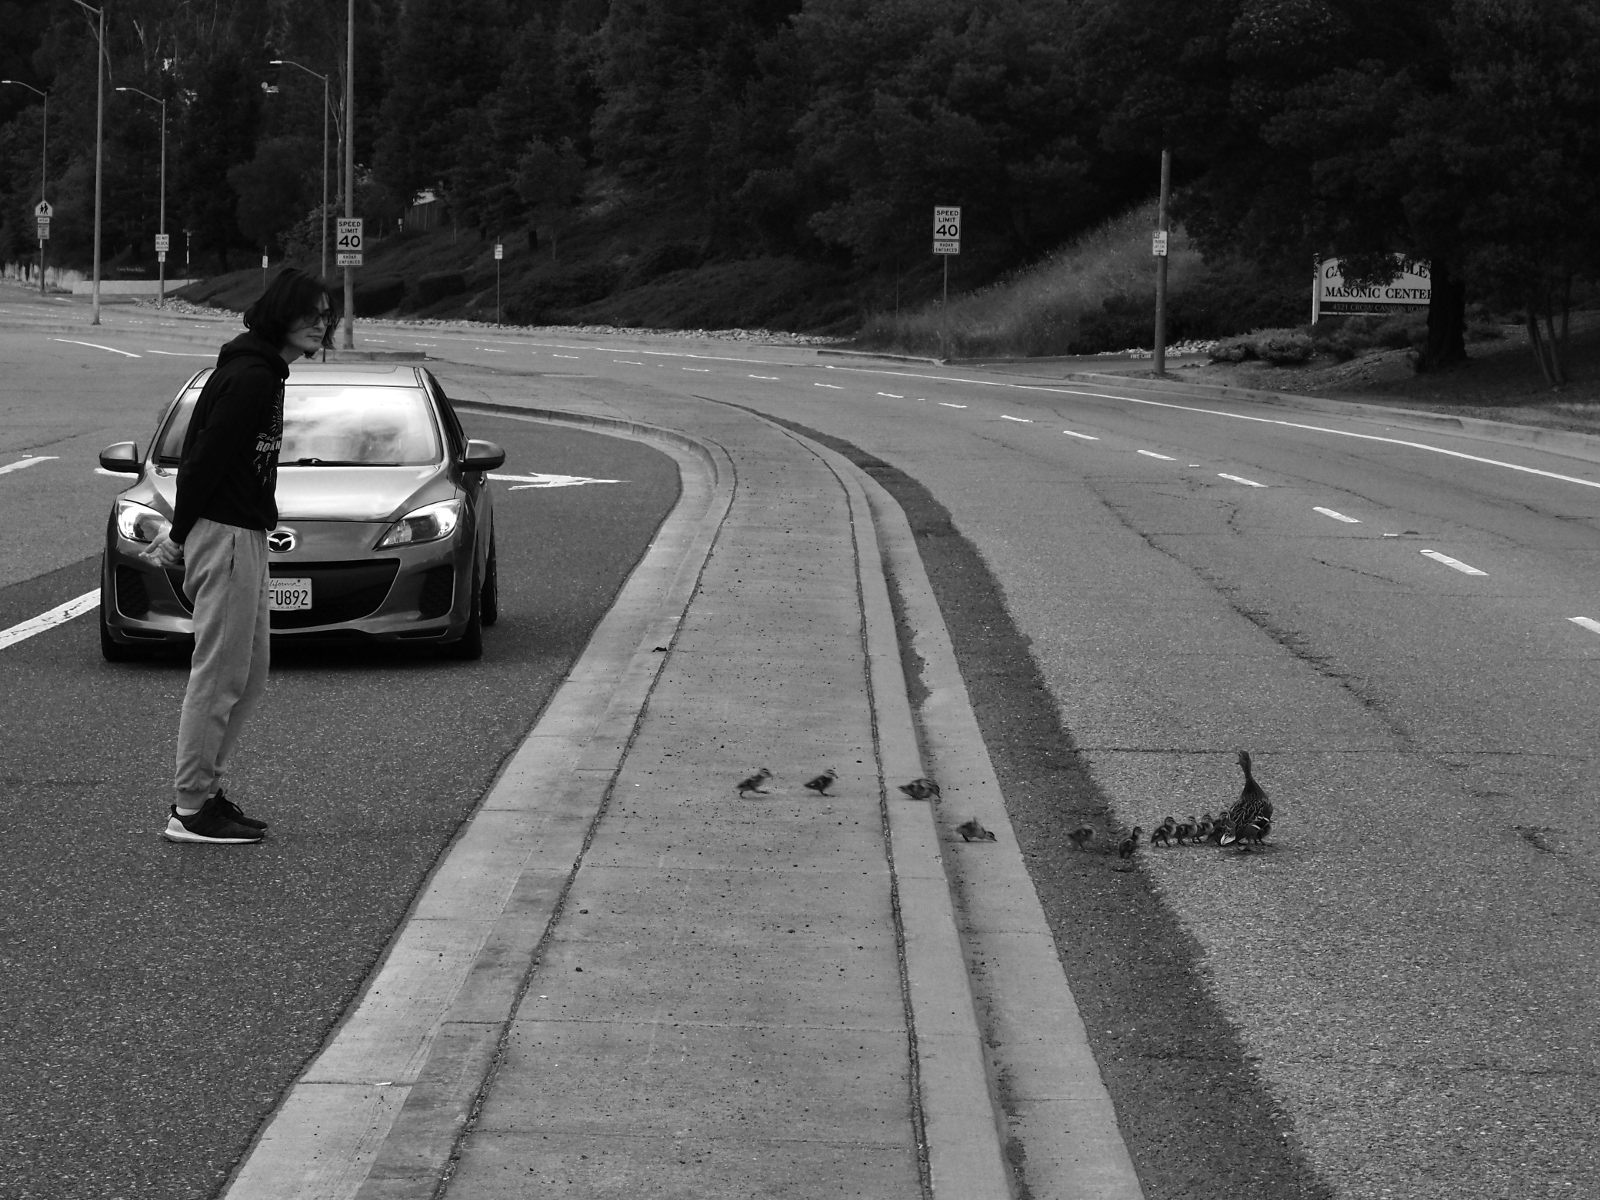 ducklings crossing a major street